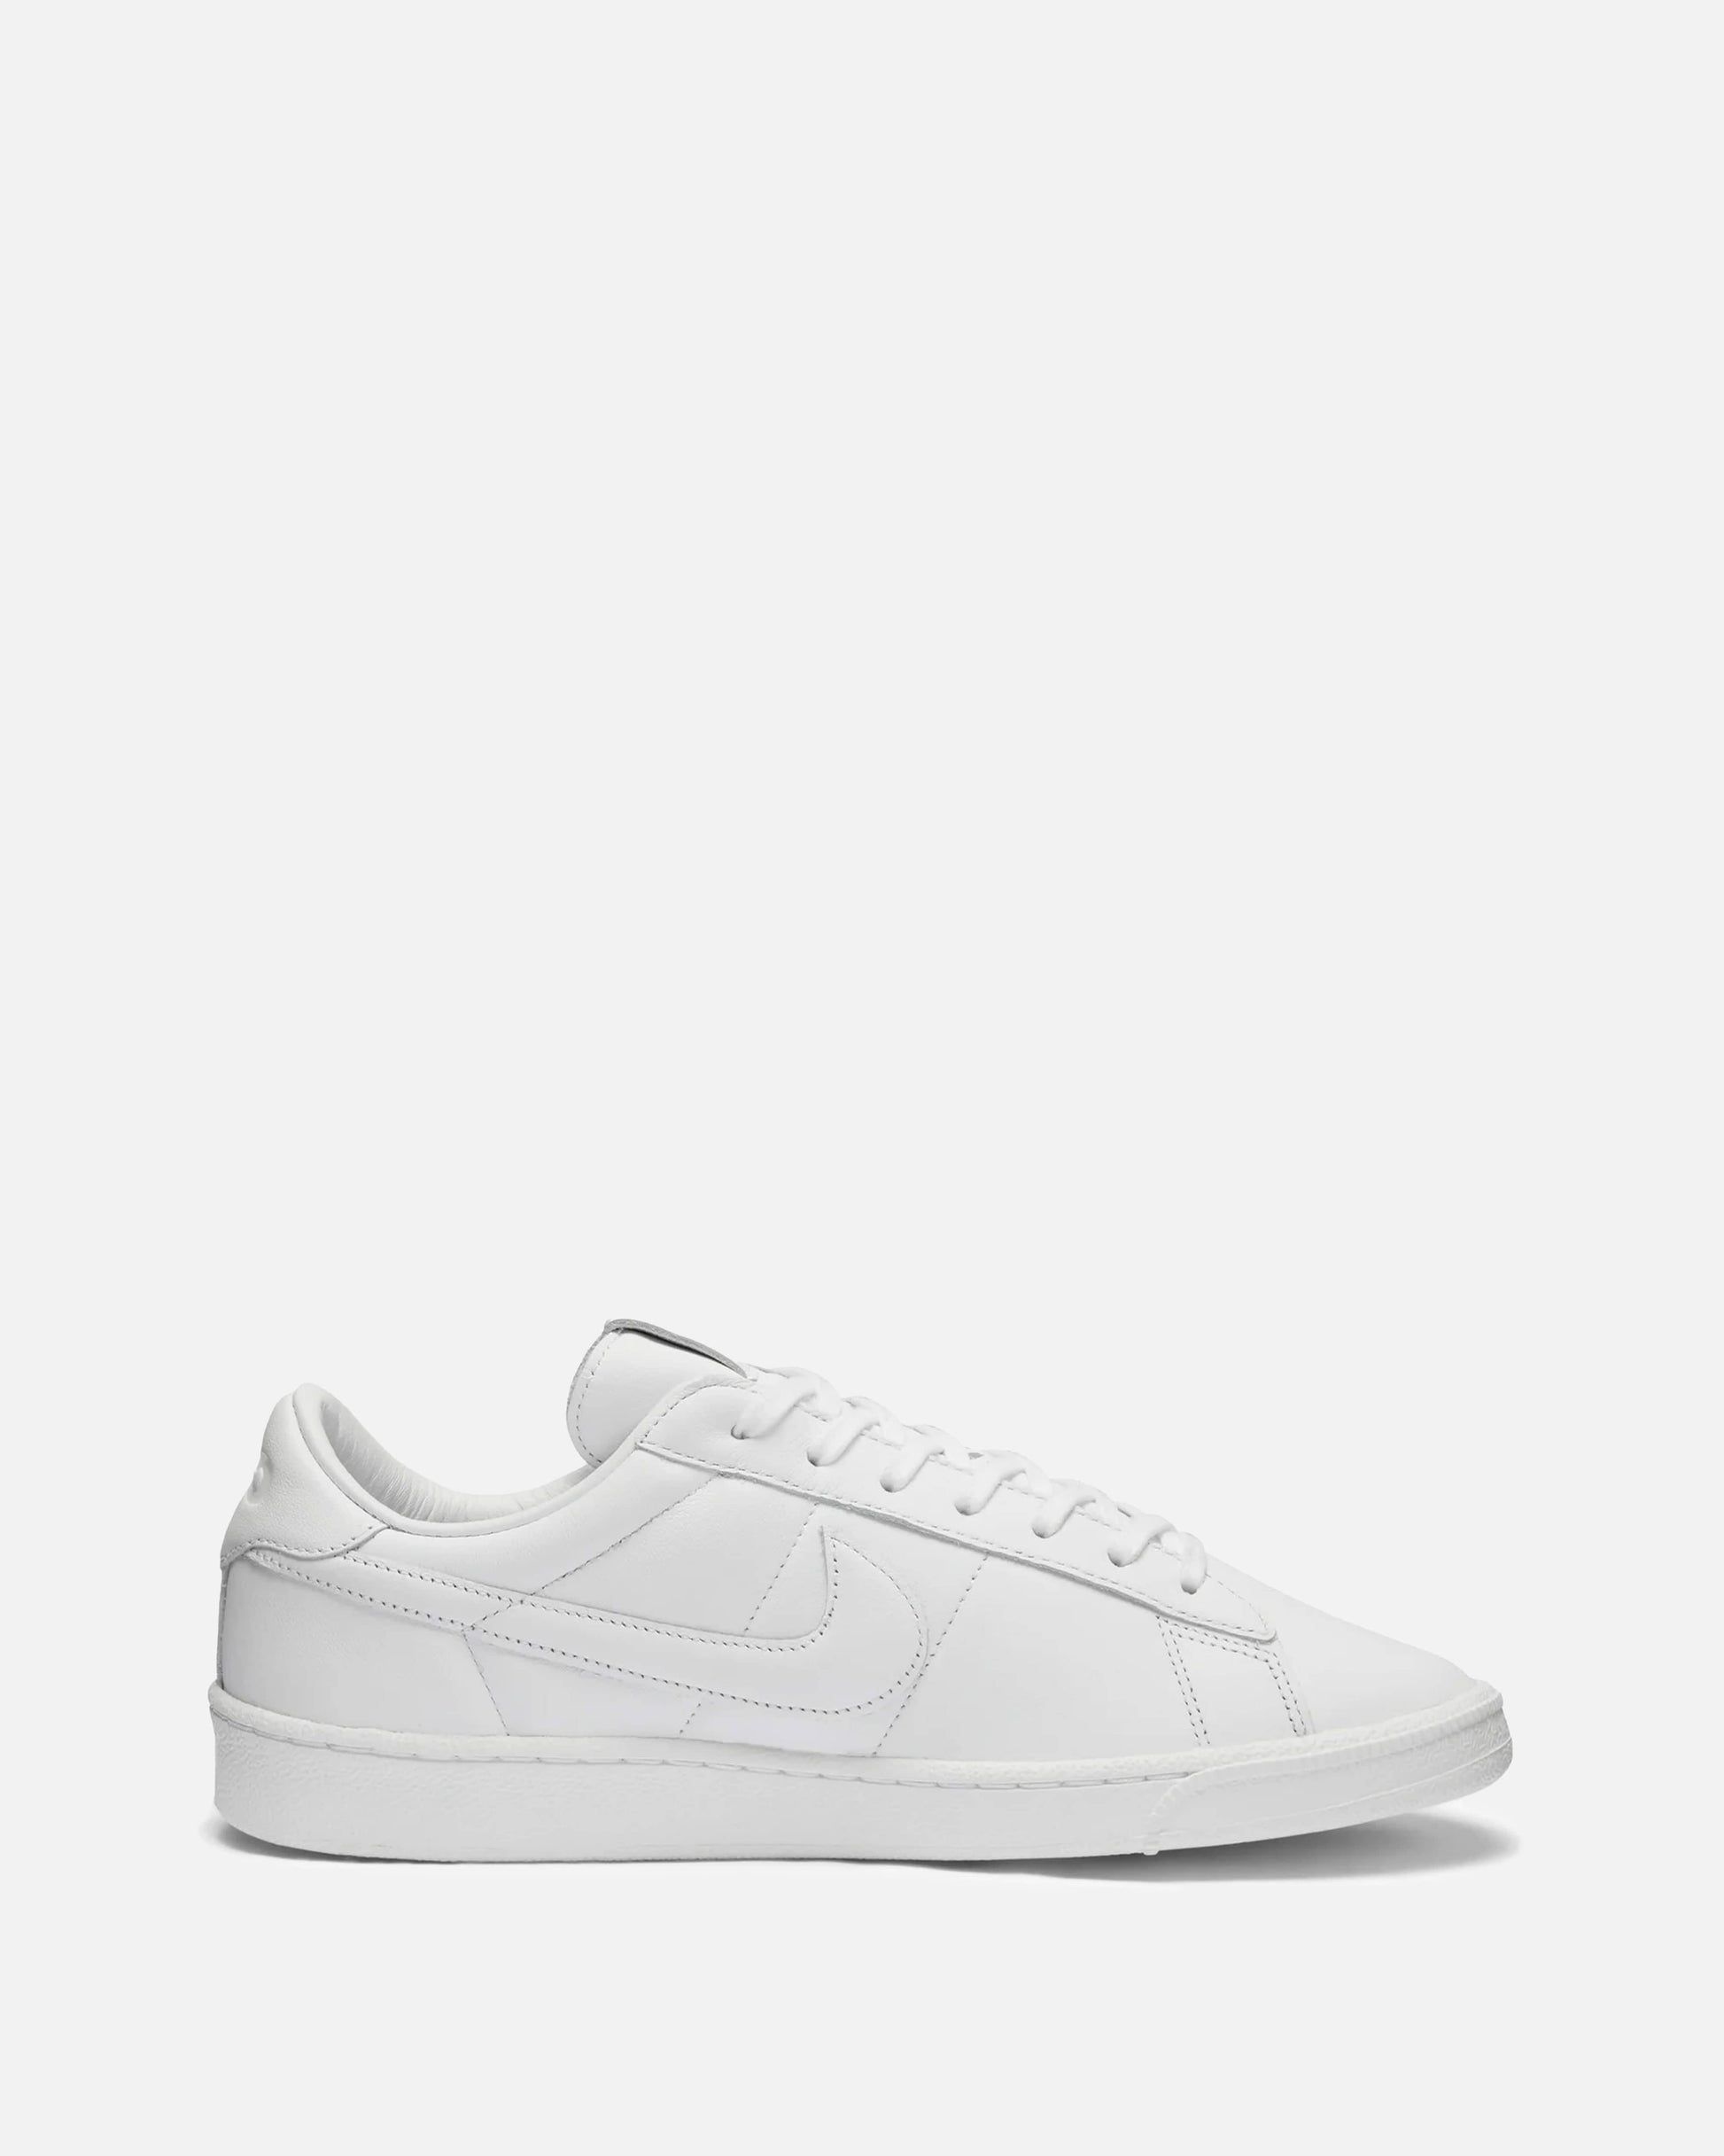 BLACK Comme des Garçons Men's Sneakers Nike Tennis Classic in White